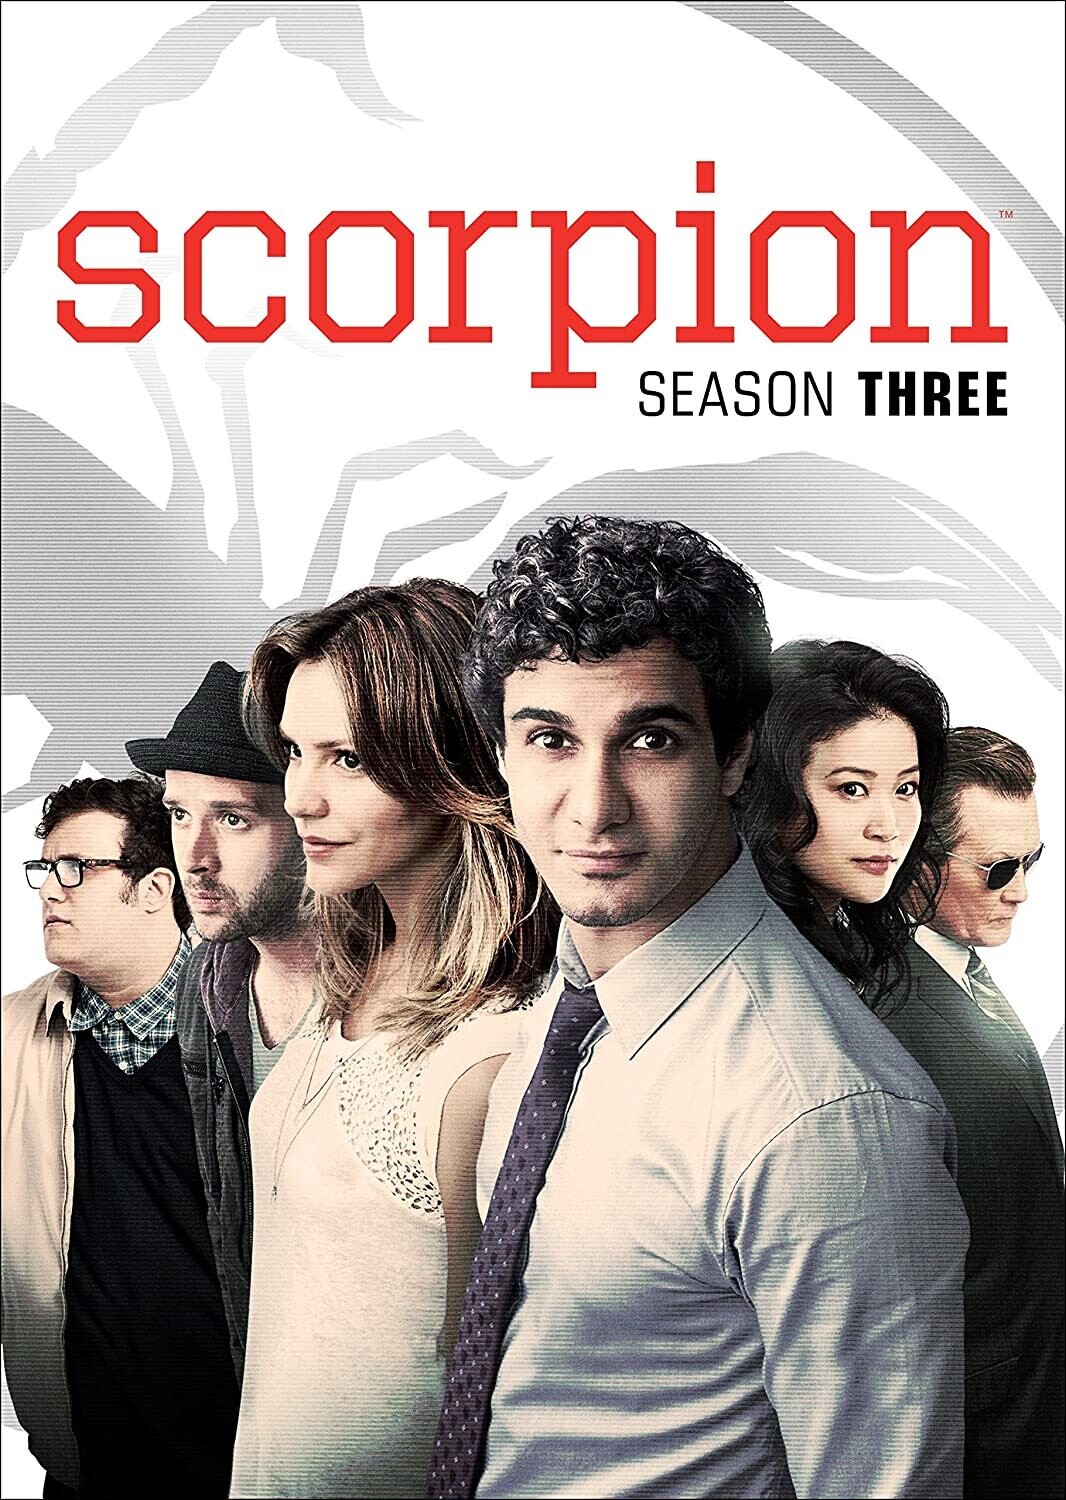 Scorpion Season Three (7 day Dvd rental)